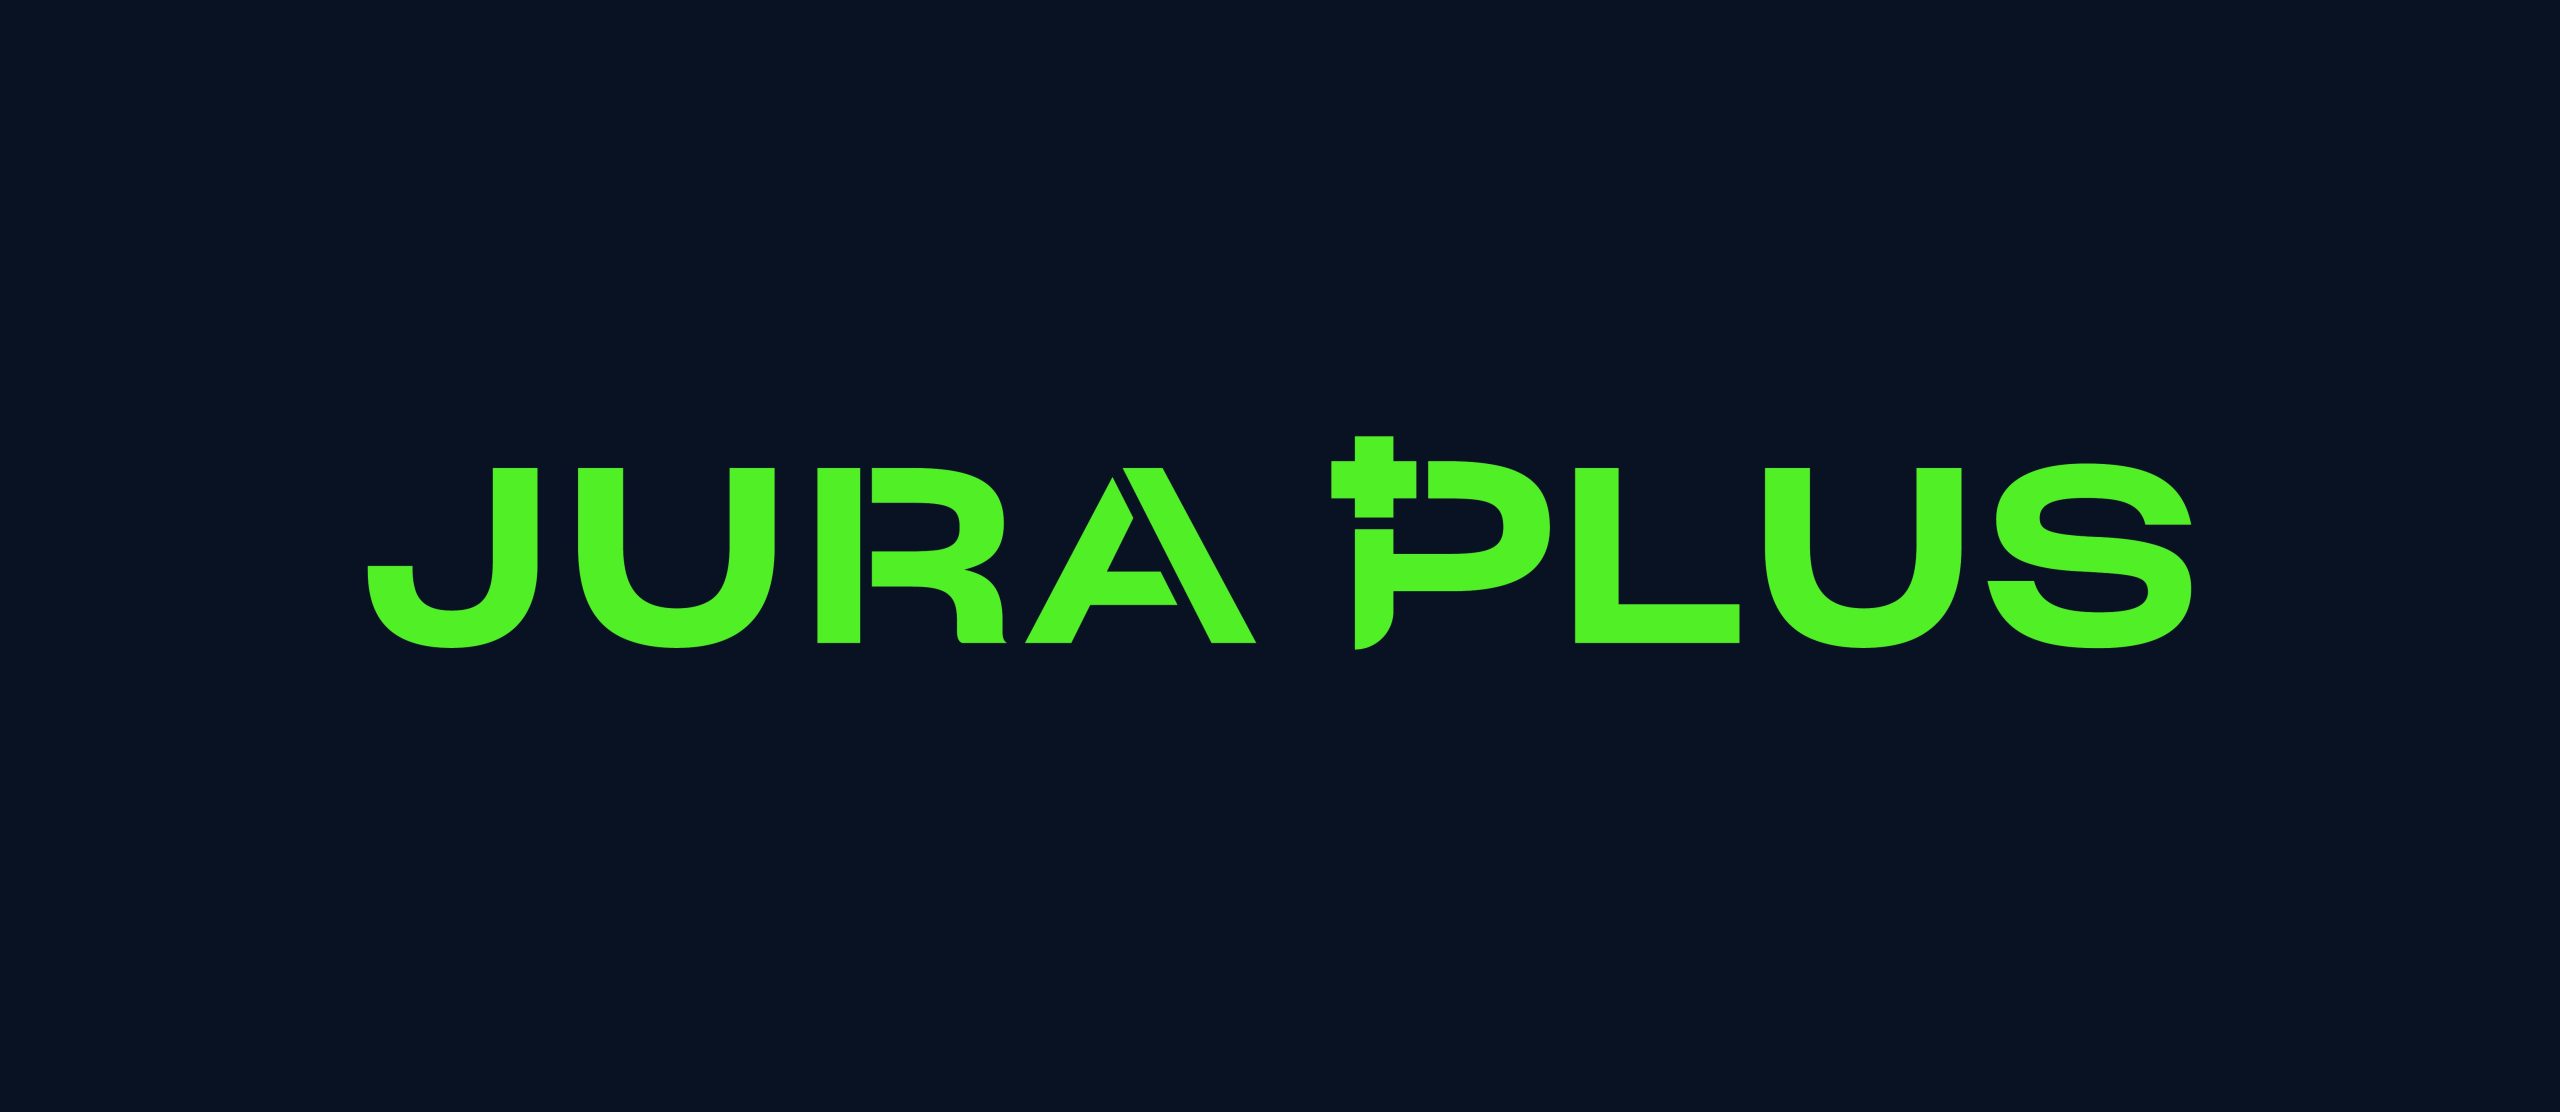 Jura plus logo